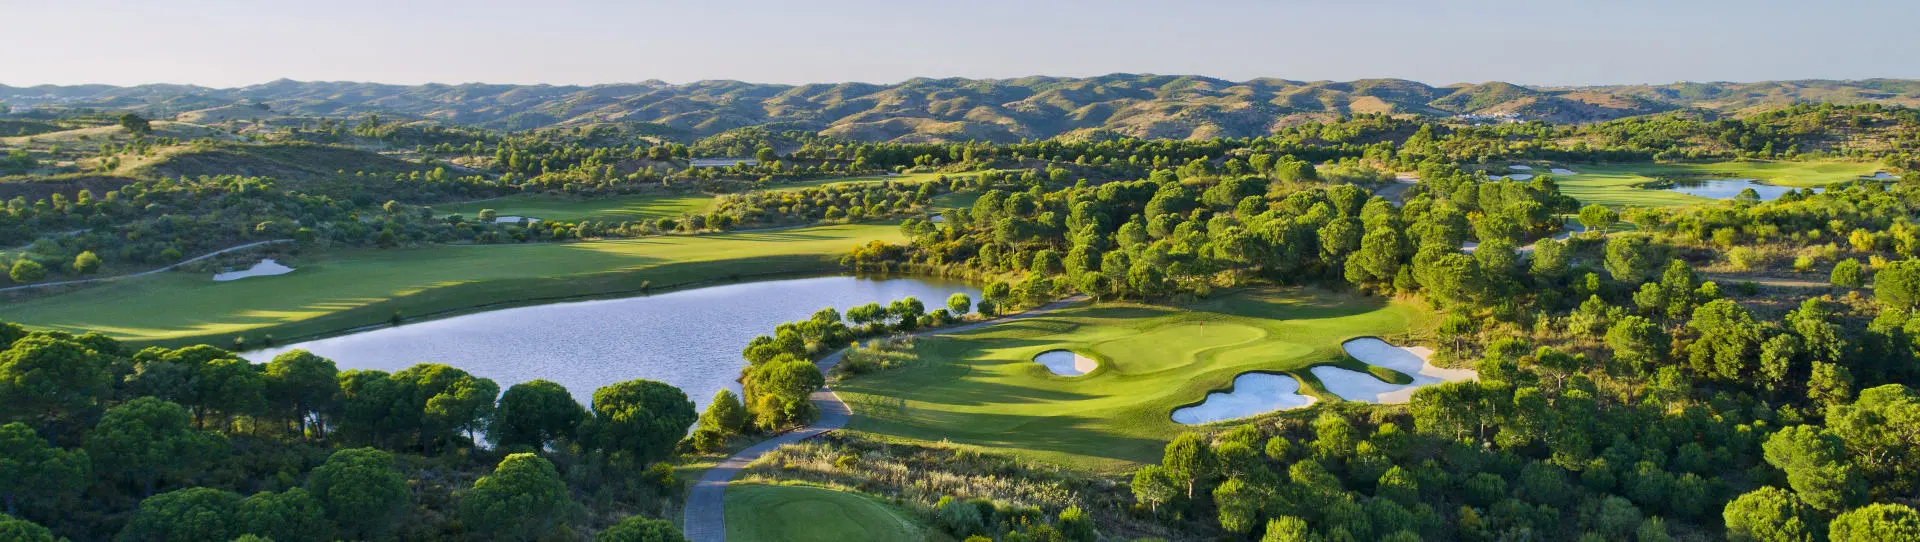 Portugal golf courses - Monte Rei North Golf Course - Photo 1